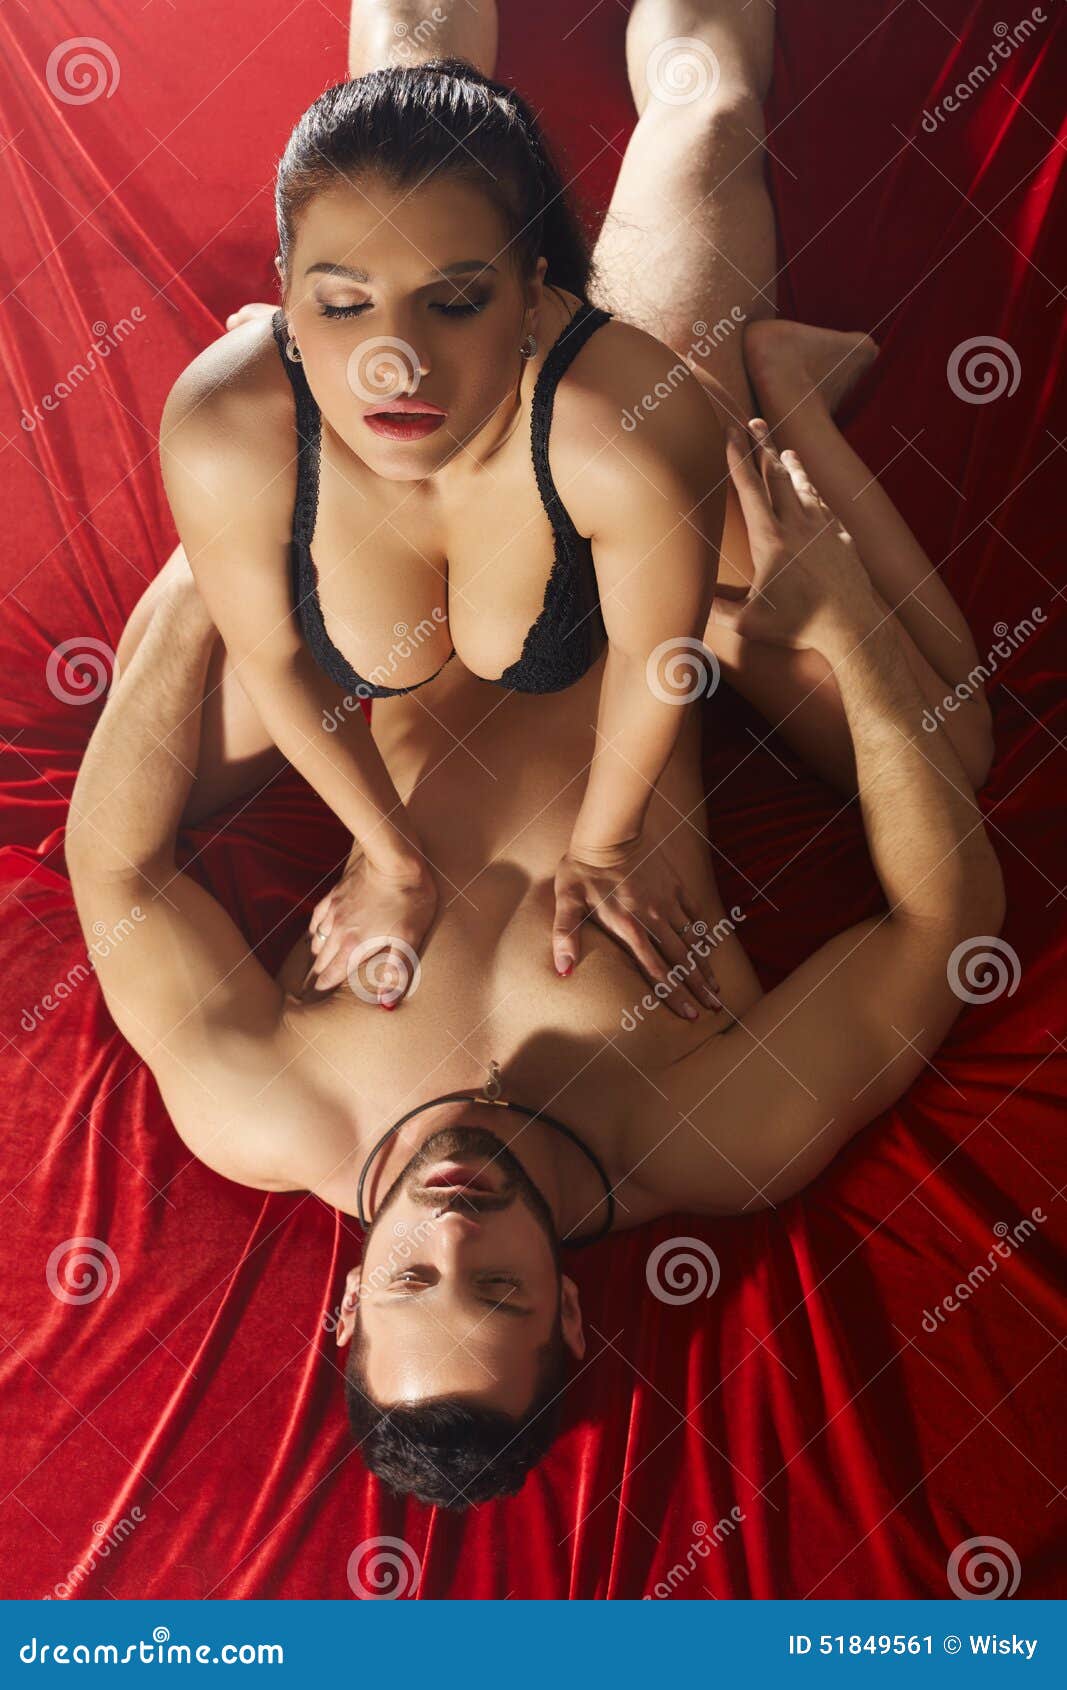 ayman elsherbiny recommends Top Sex Photos